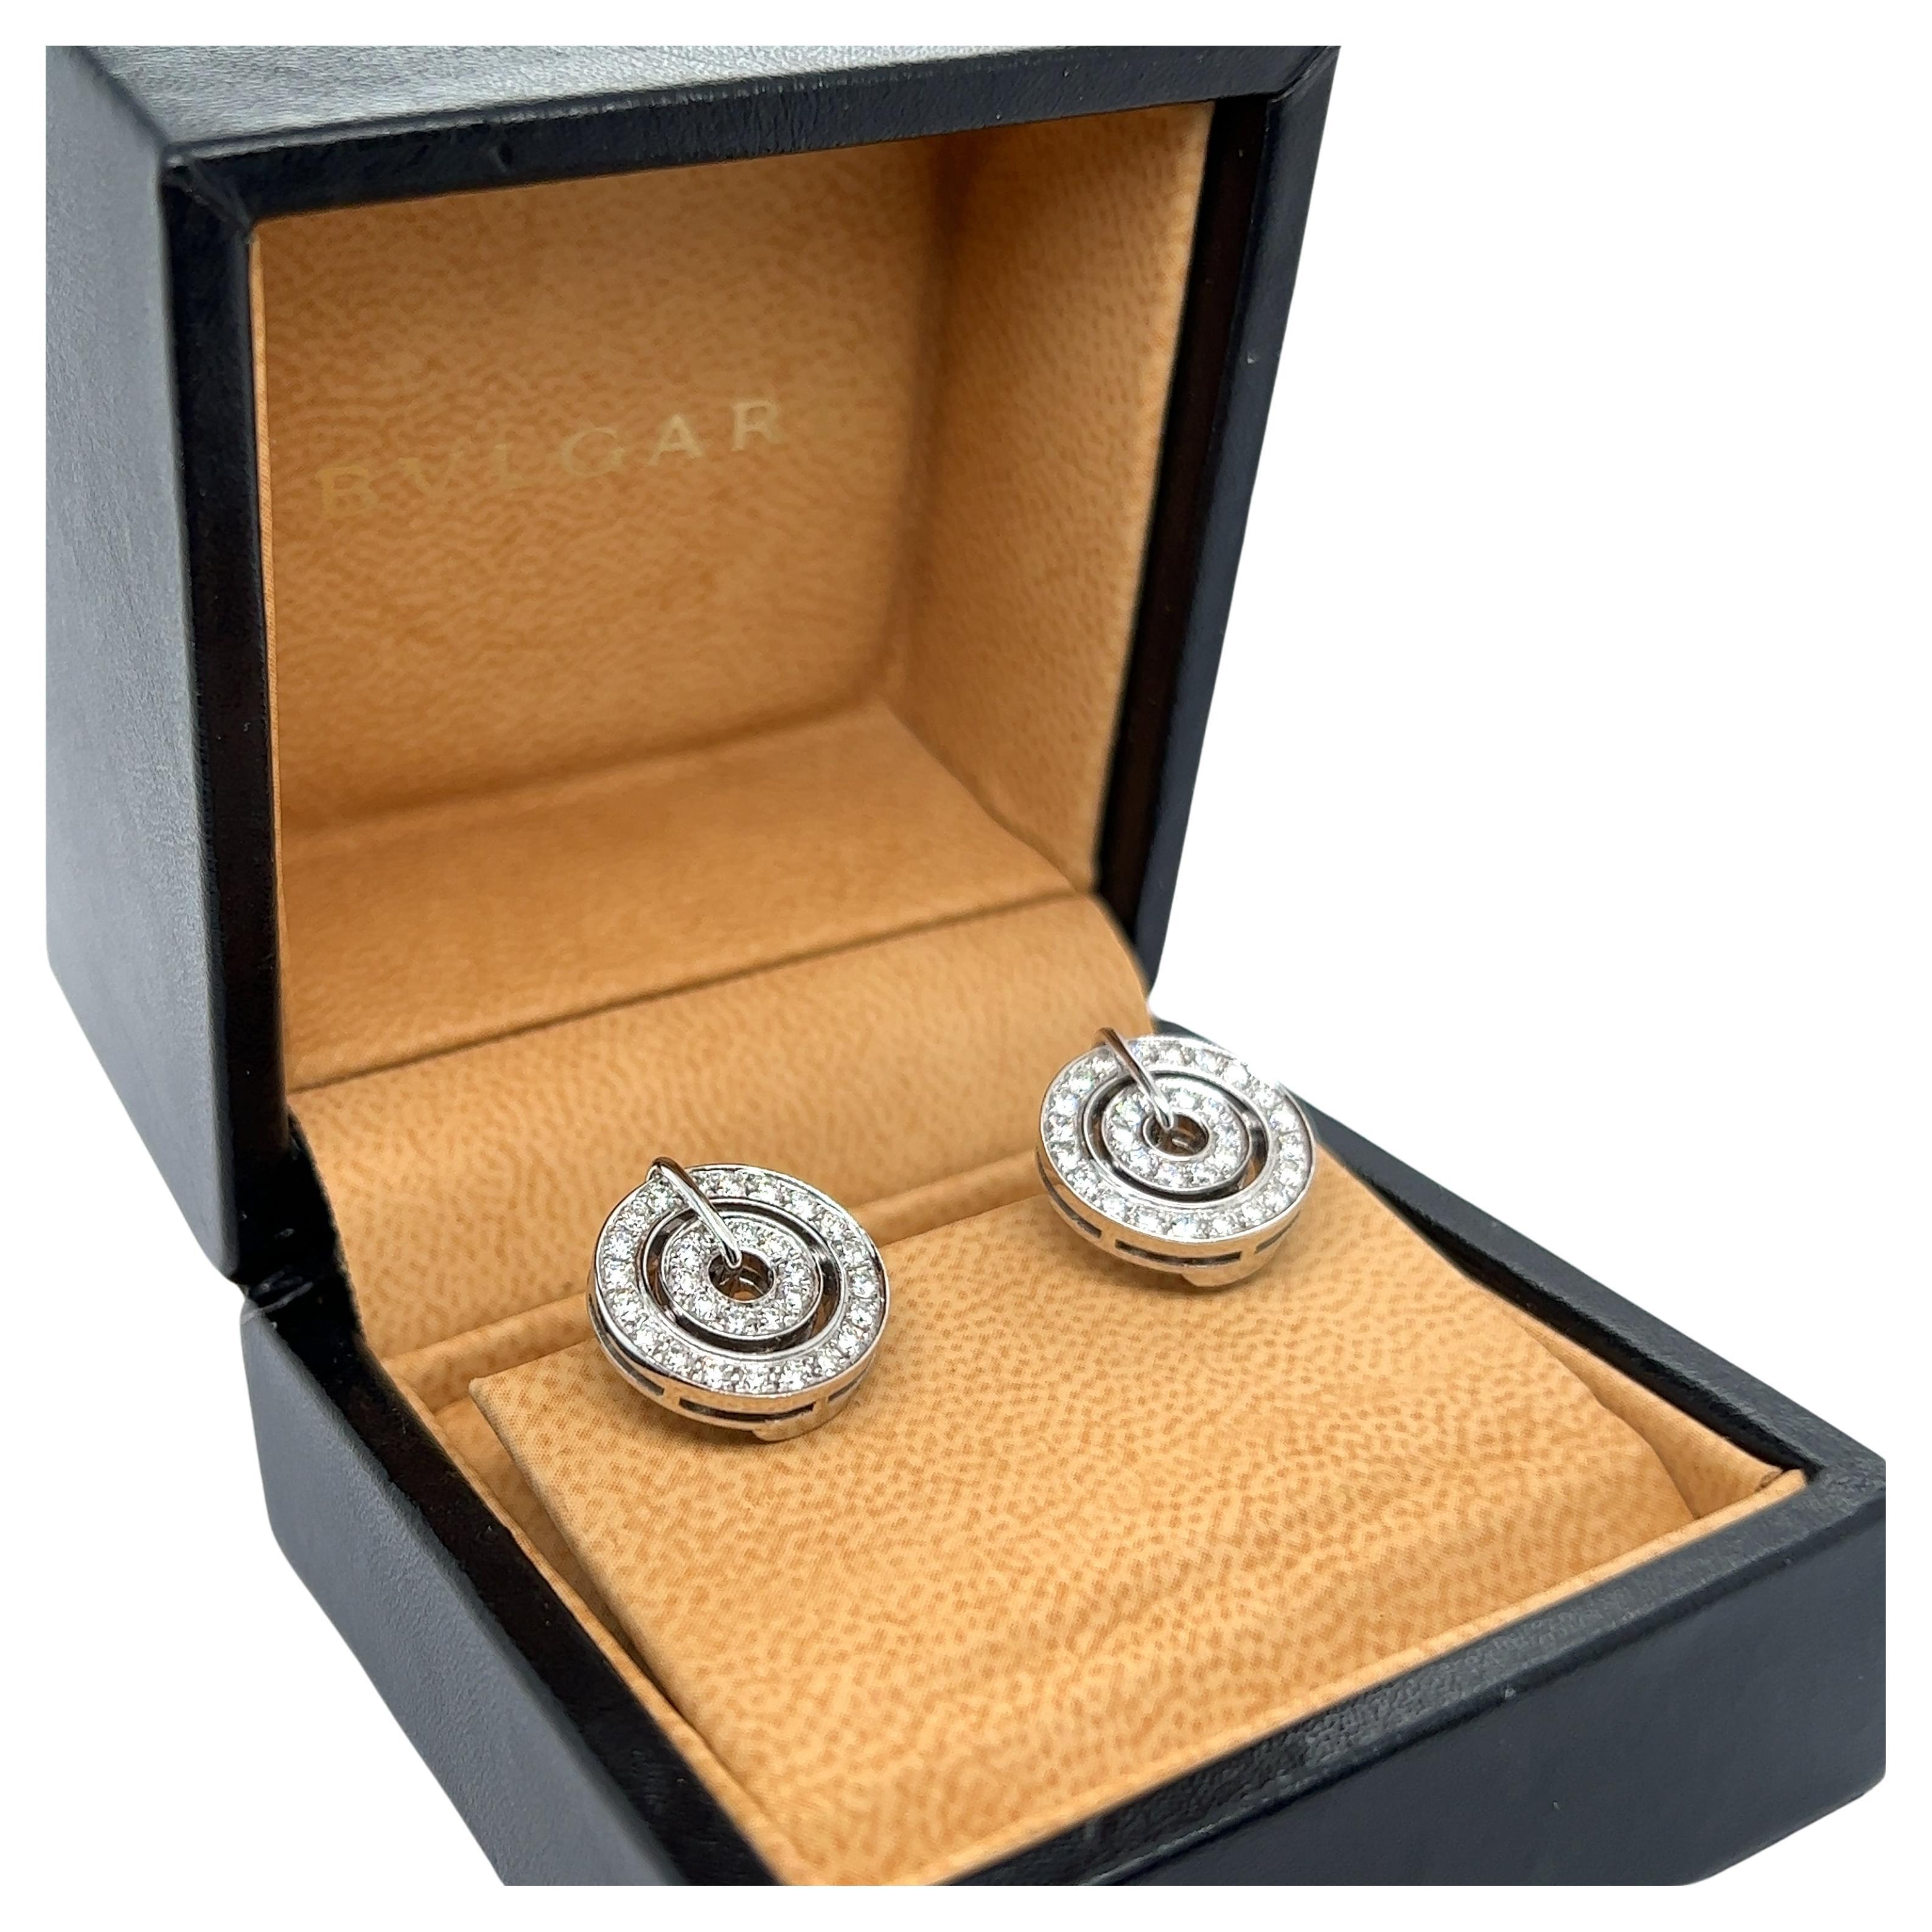 The Bvlgari diamond earrings from the 